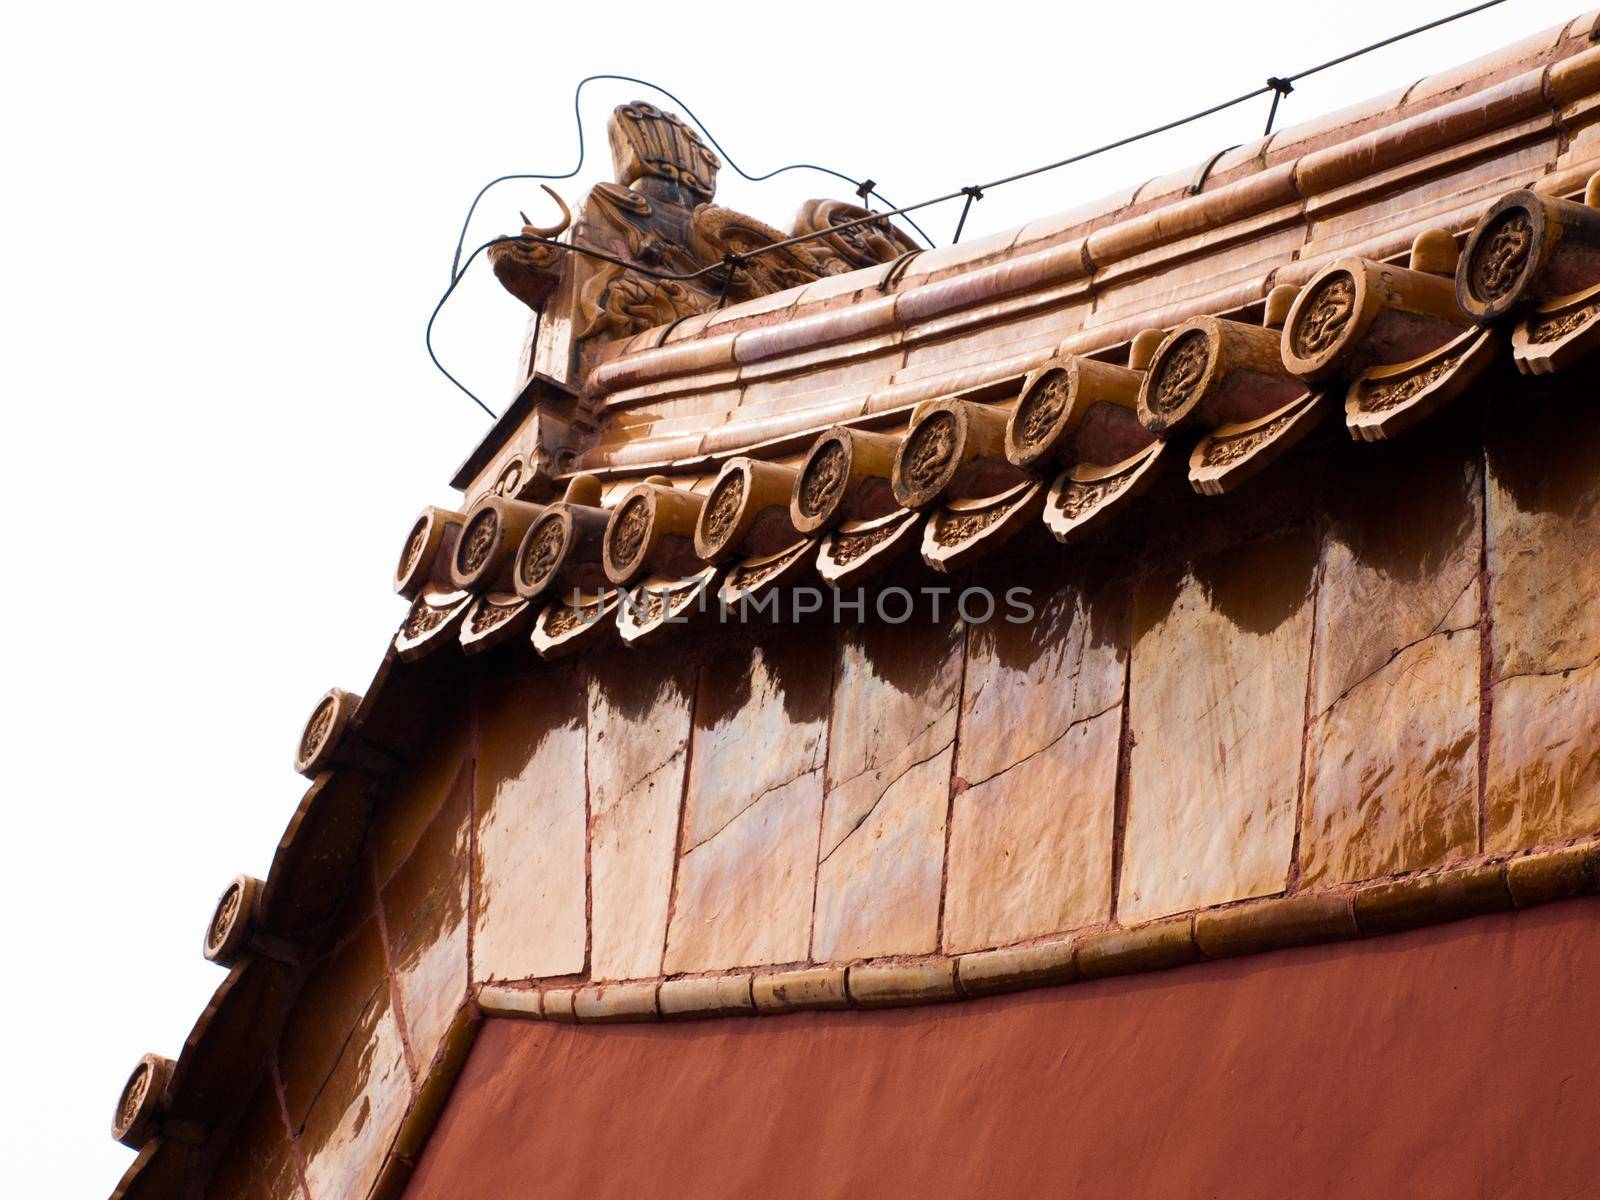 Forbidden City by arinahabich